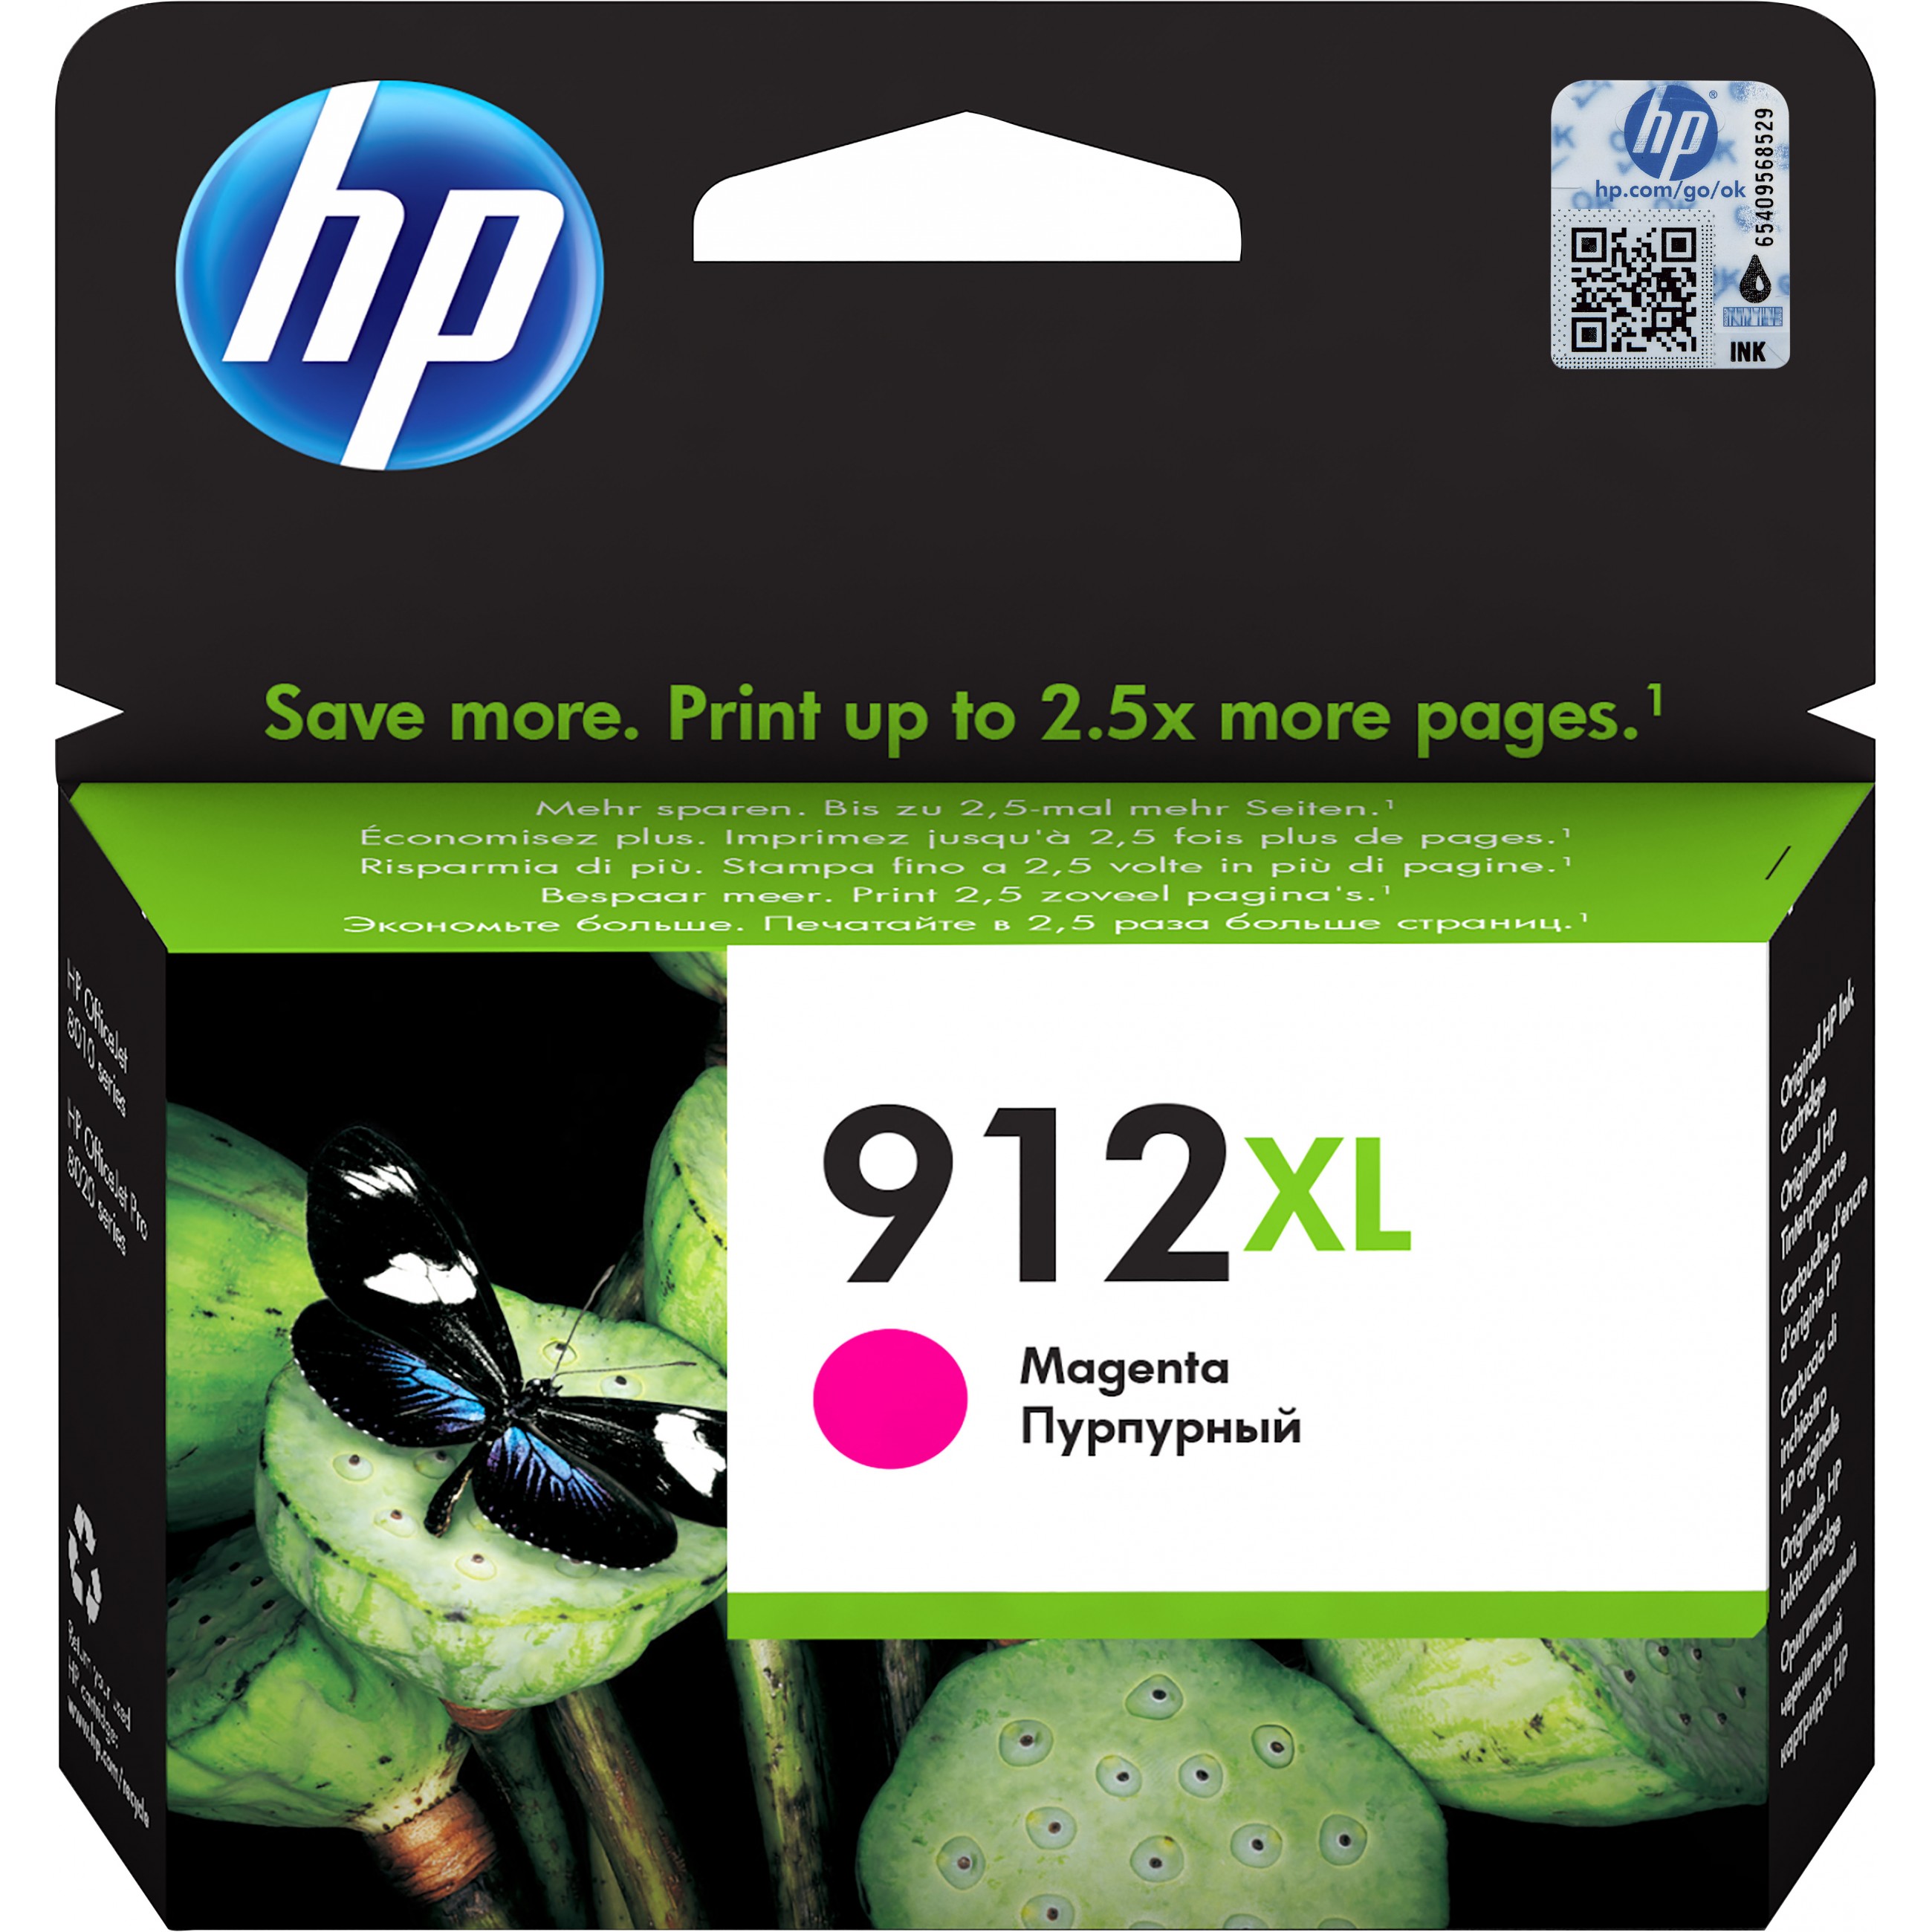 HP 912XL High Yield Magenta Original ink cartridge - 3YL82AE#BGX